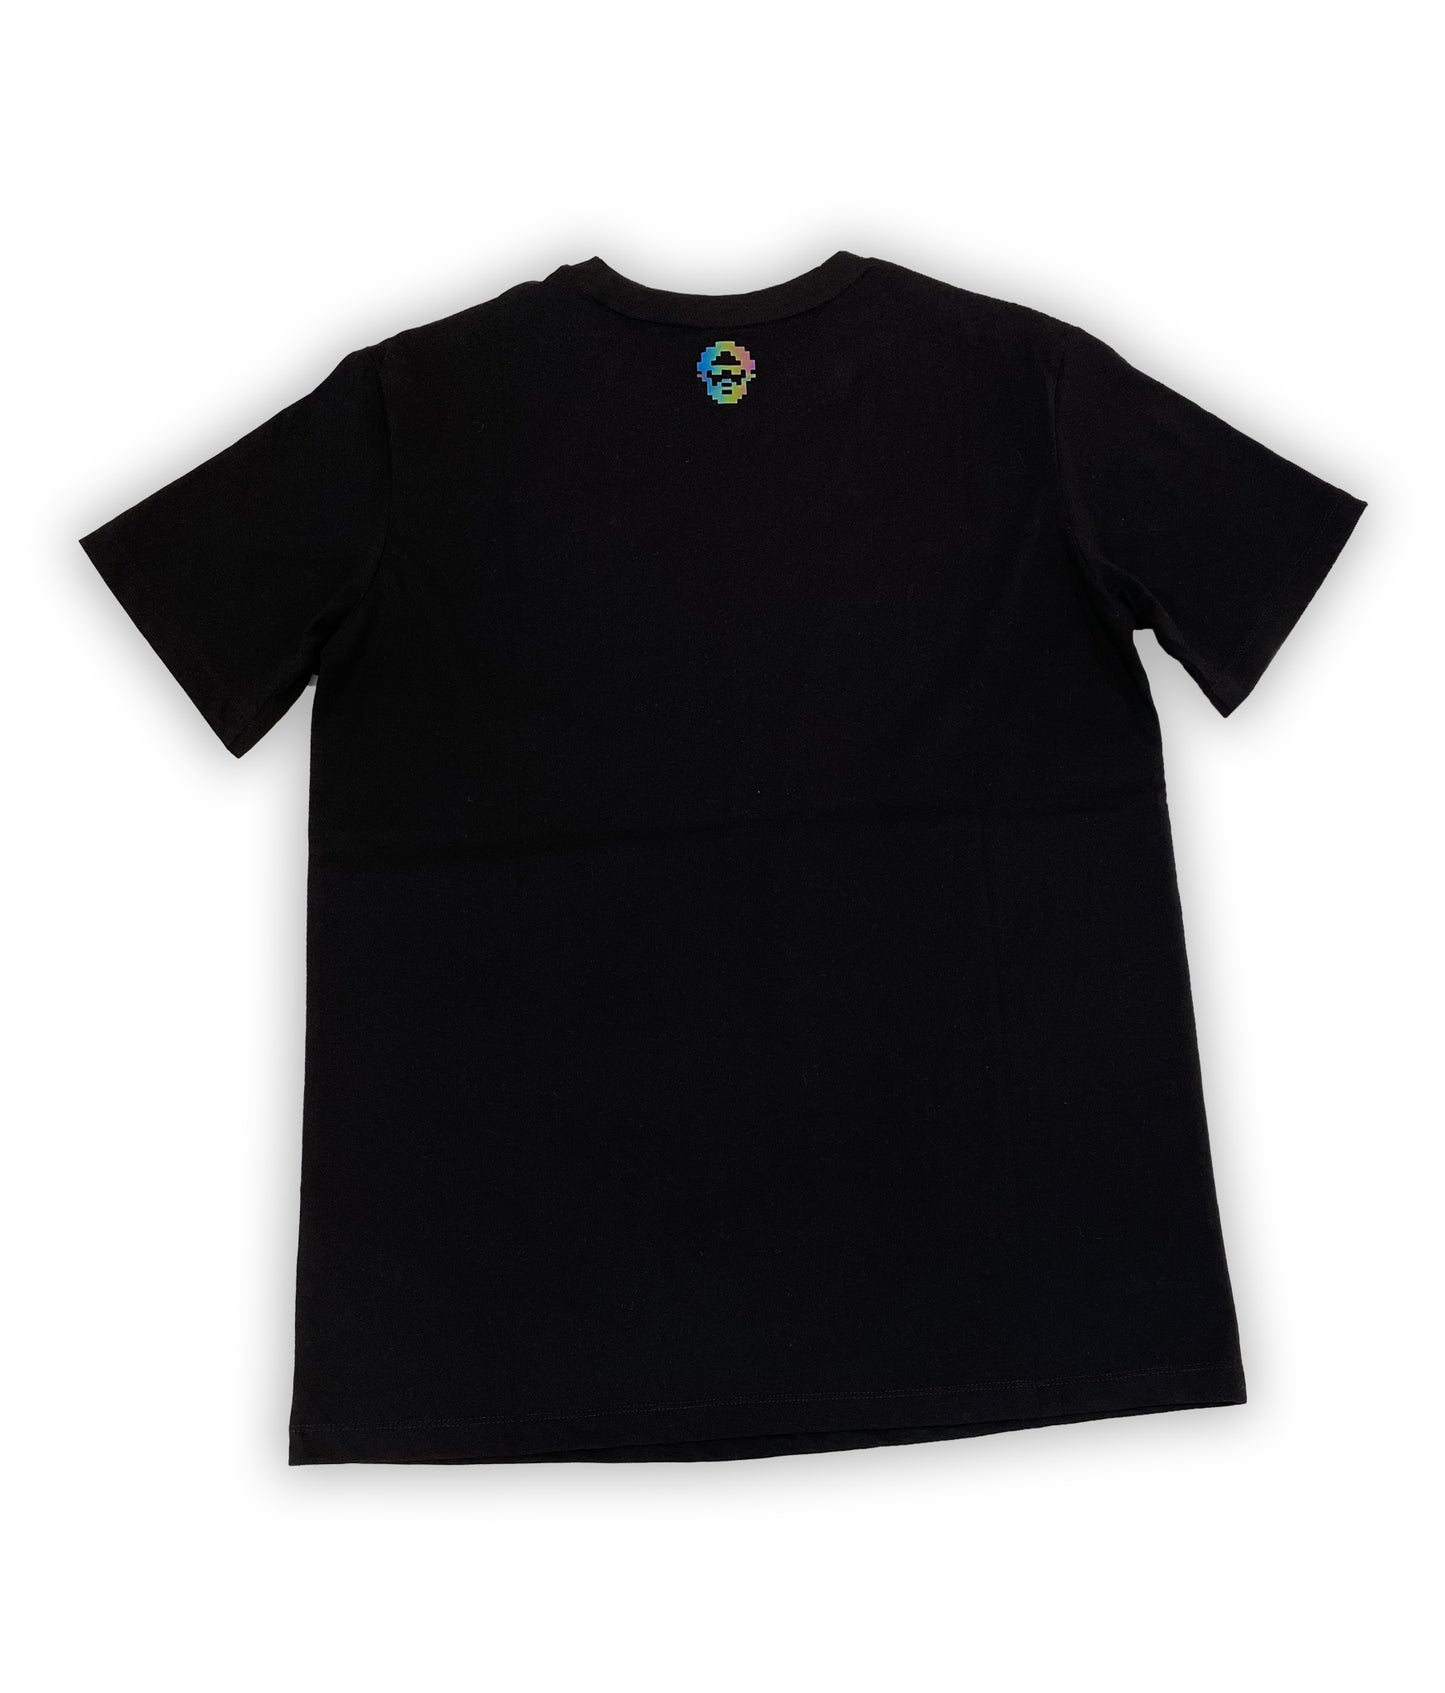 Black DeGods T-Shirt with Gray/Reflective Logo